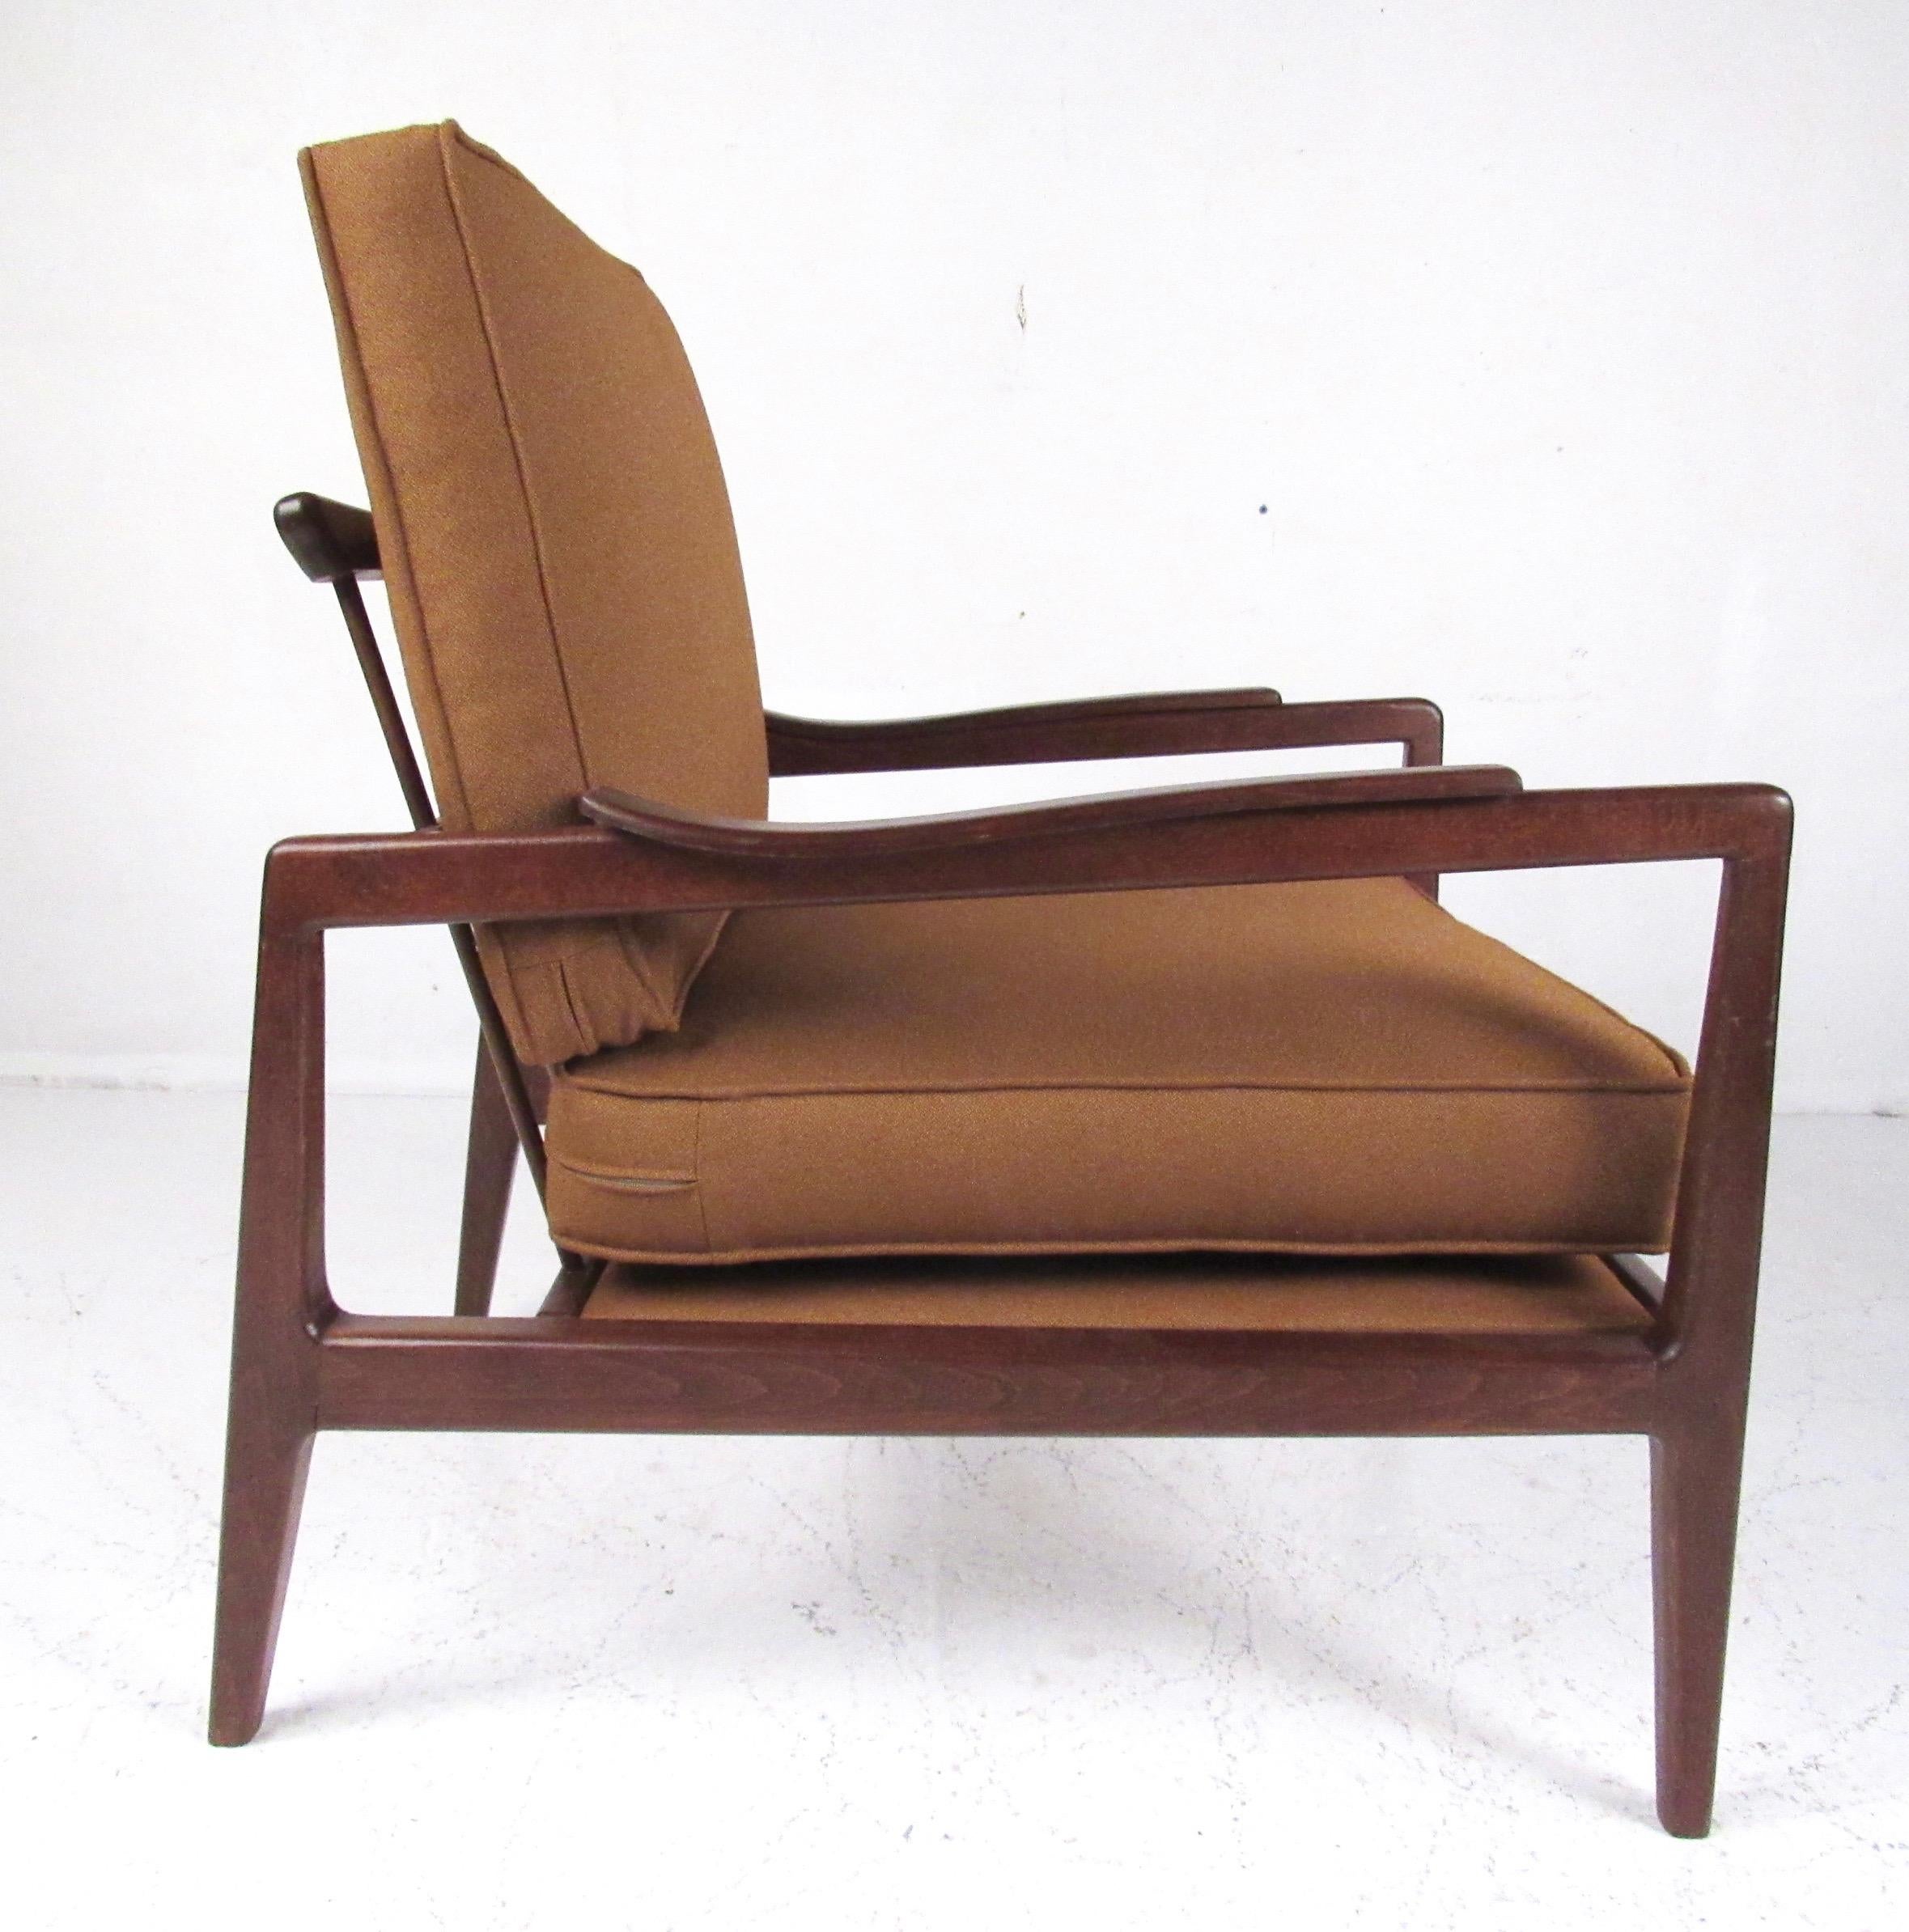 20th Century Edmond Spence Designed Walnut Lounge Chairs